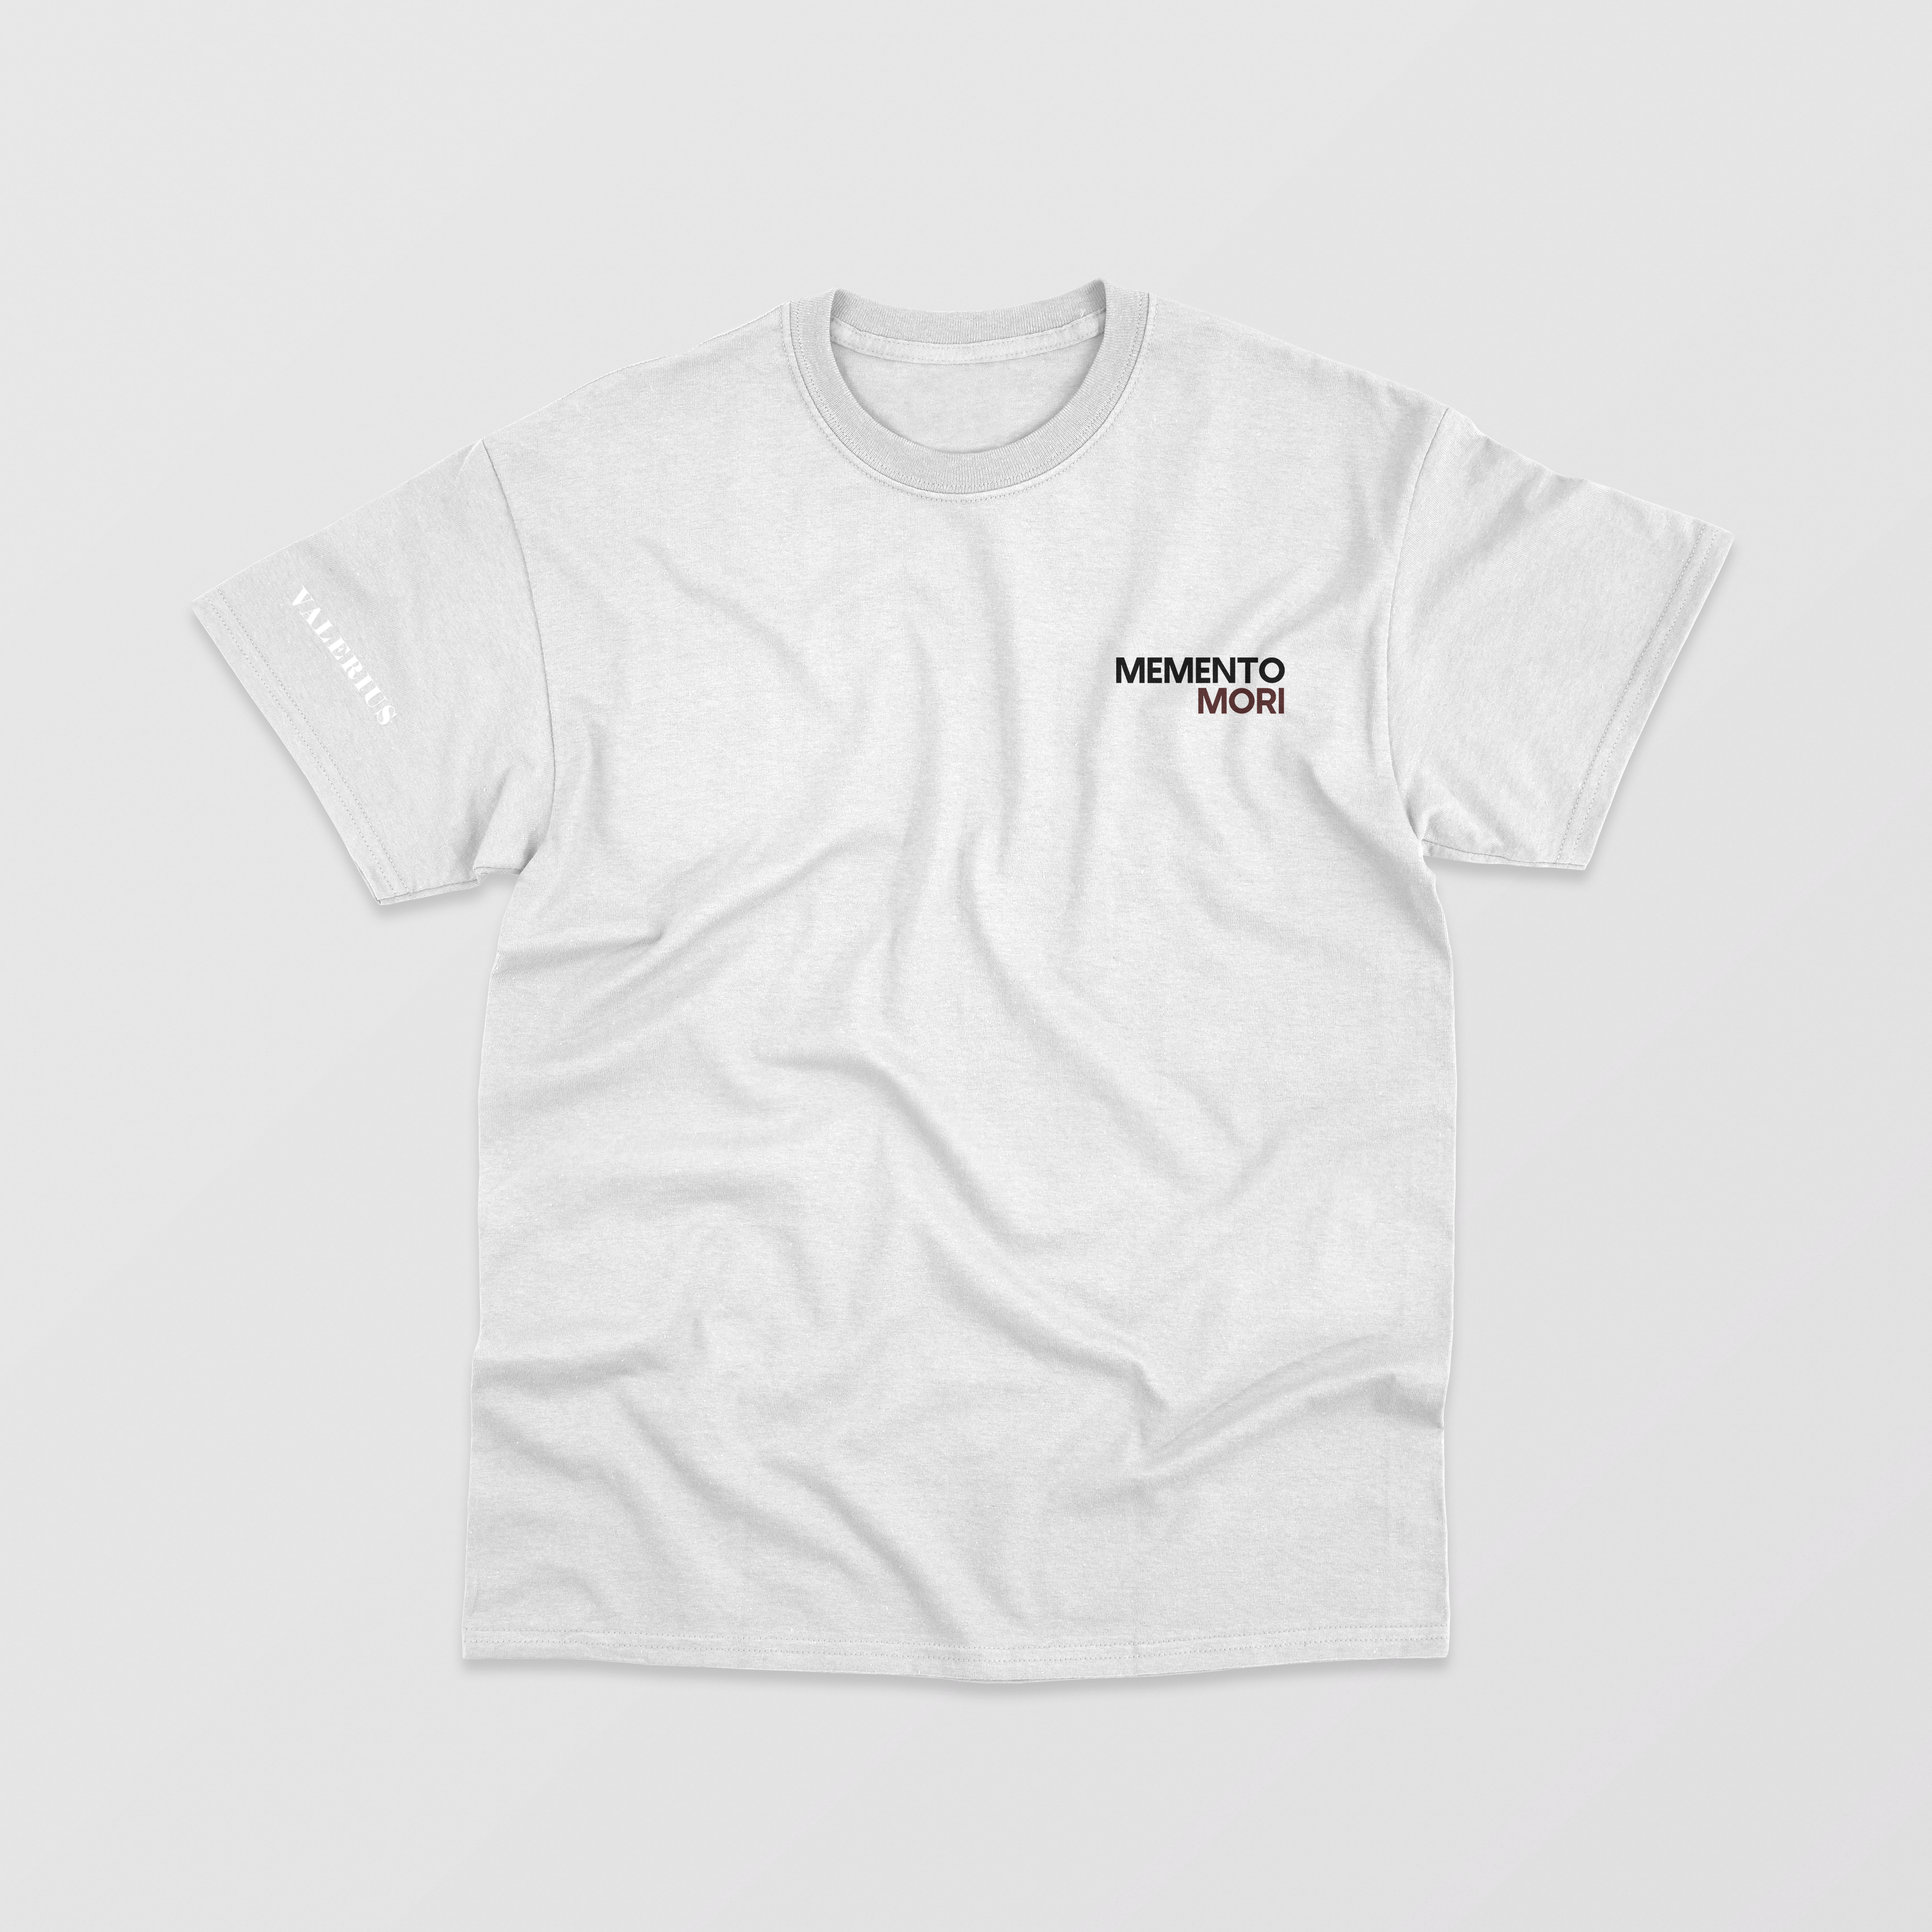 Memento Mori - White T-Shirt